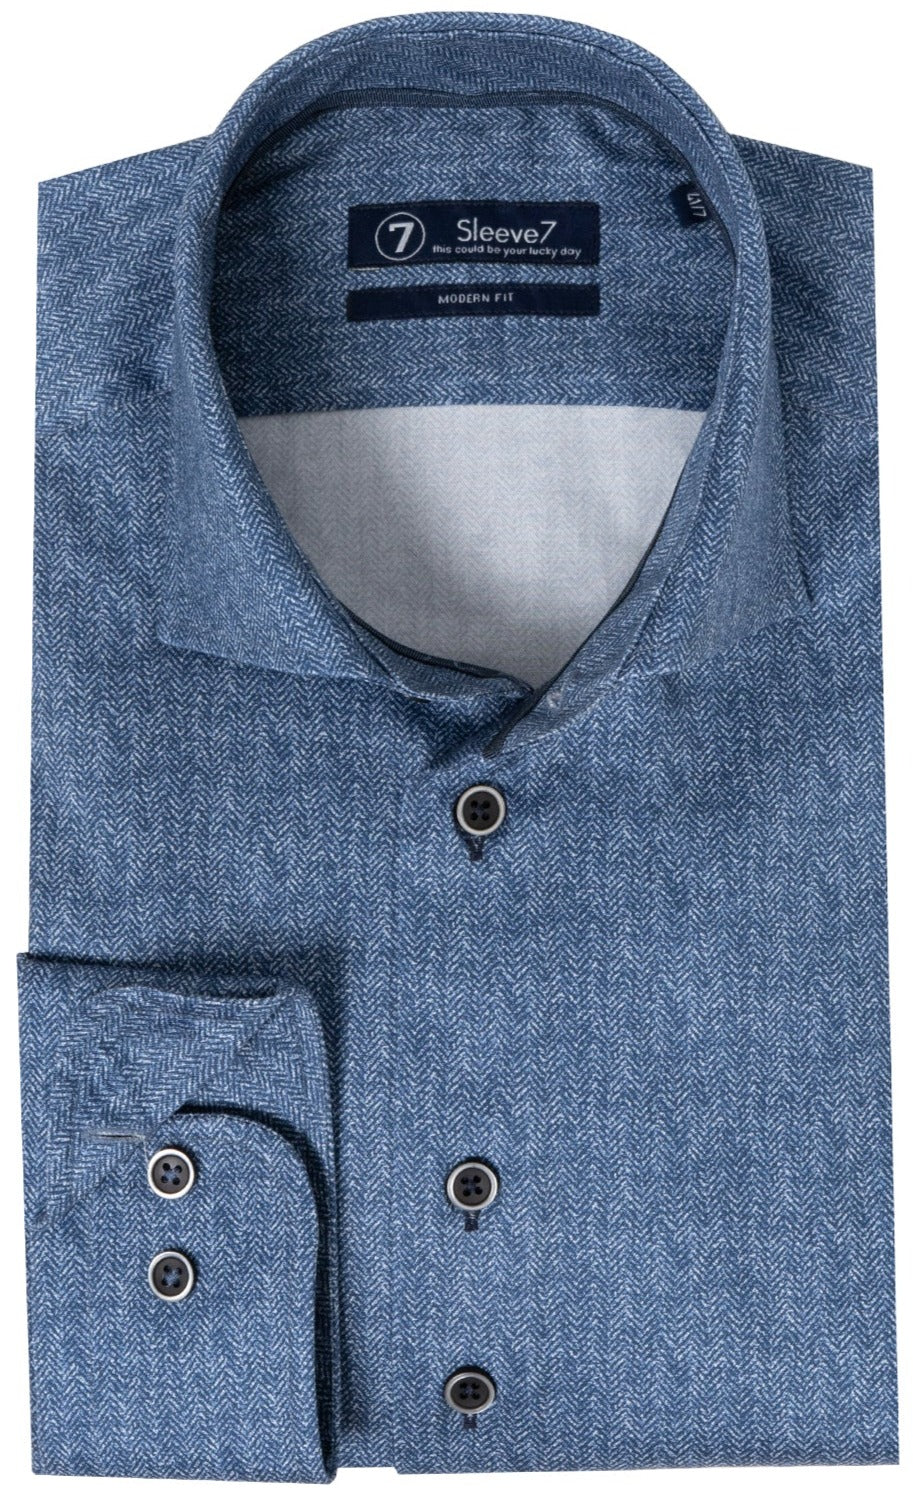 Onnauwkeurig temperament verachten Kobalt Blauw Print Overhemd Mouwlengte 7 - Sleeve7 – CJE Fashion